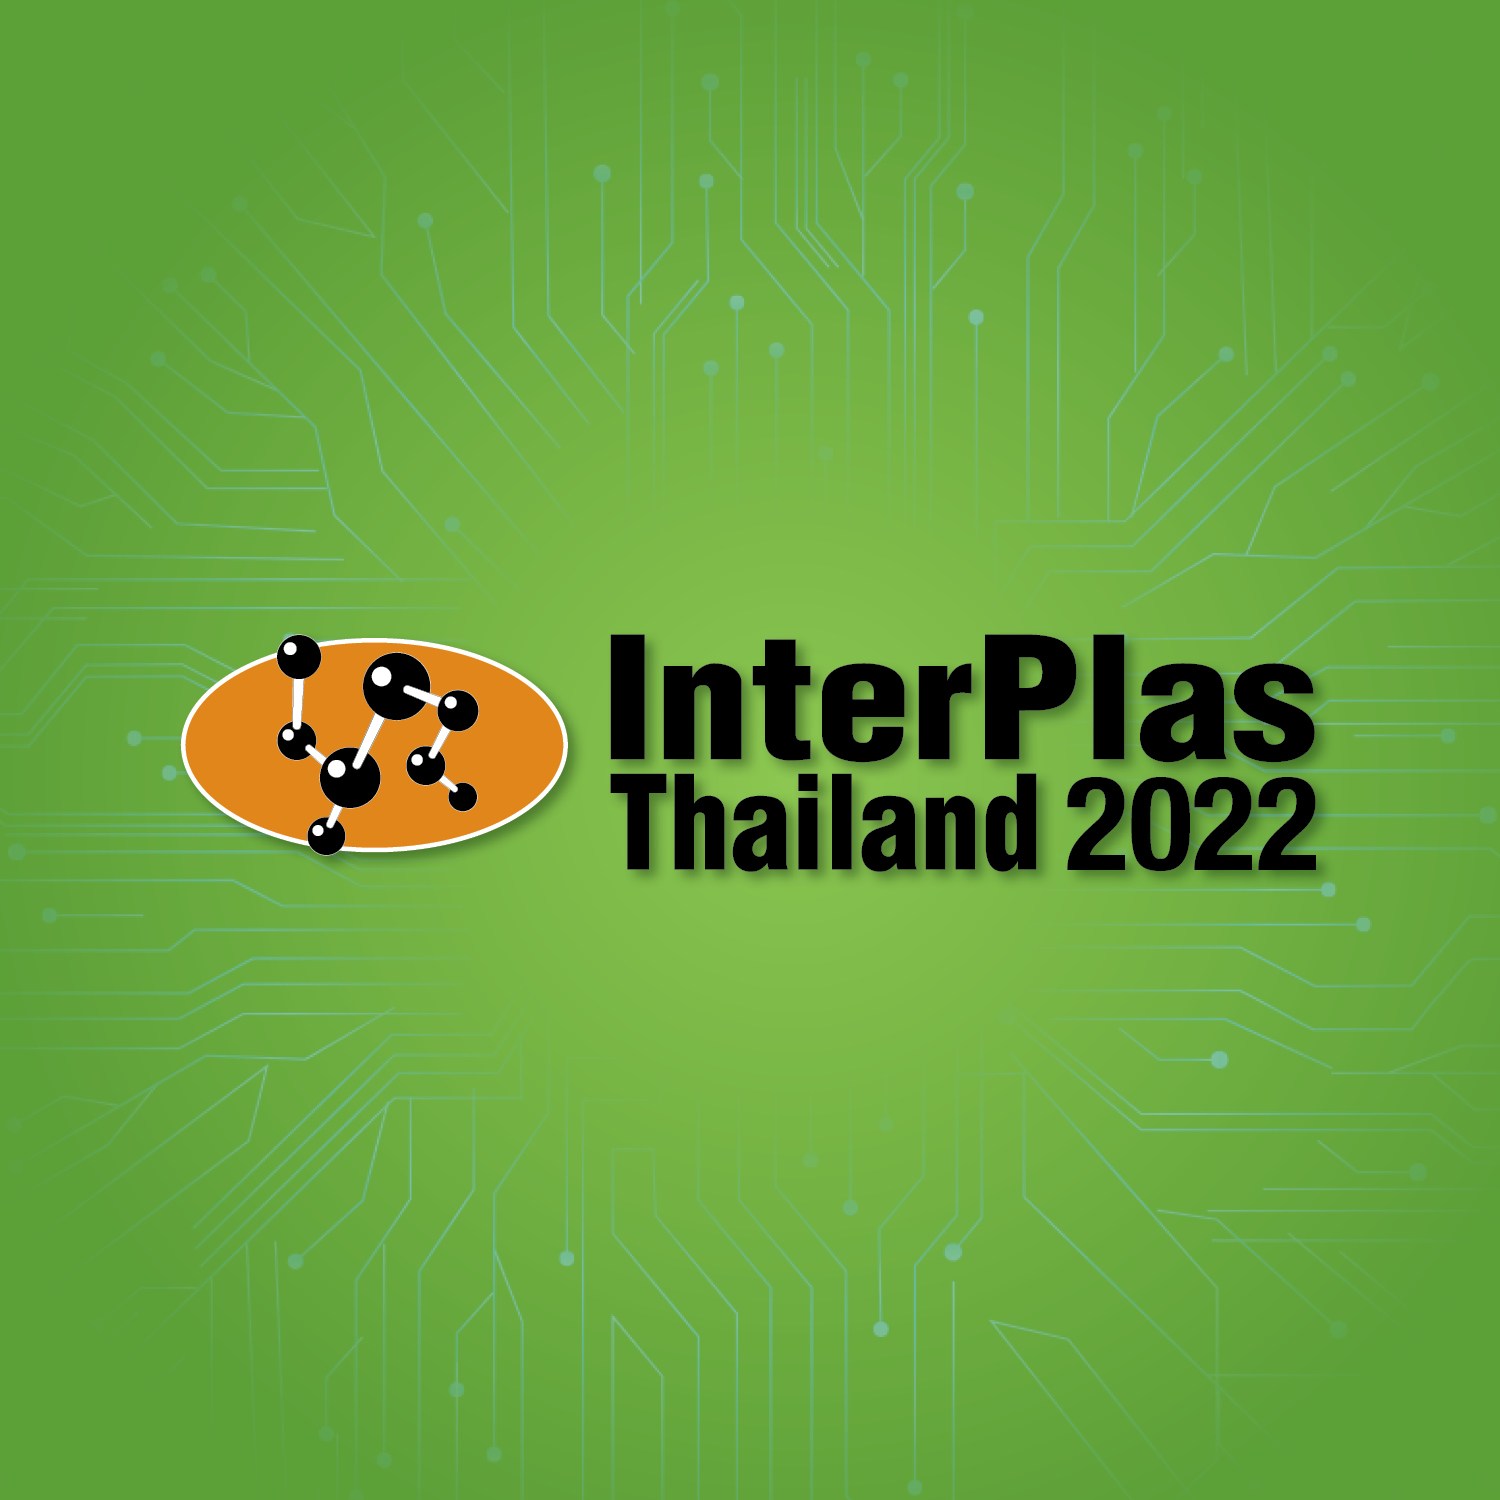 InterPlas Thailand 2022 (ITP 2022)